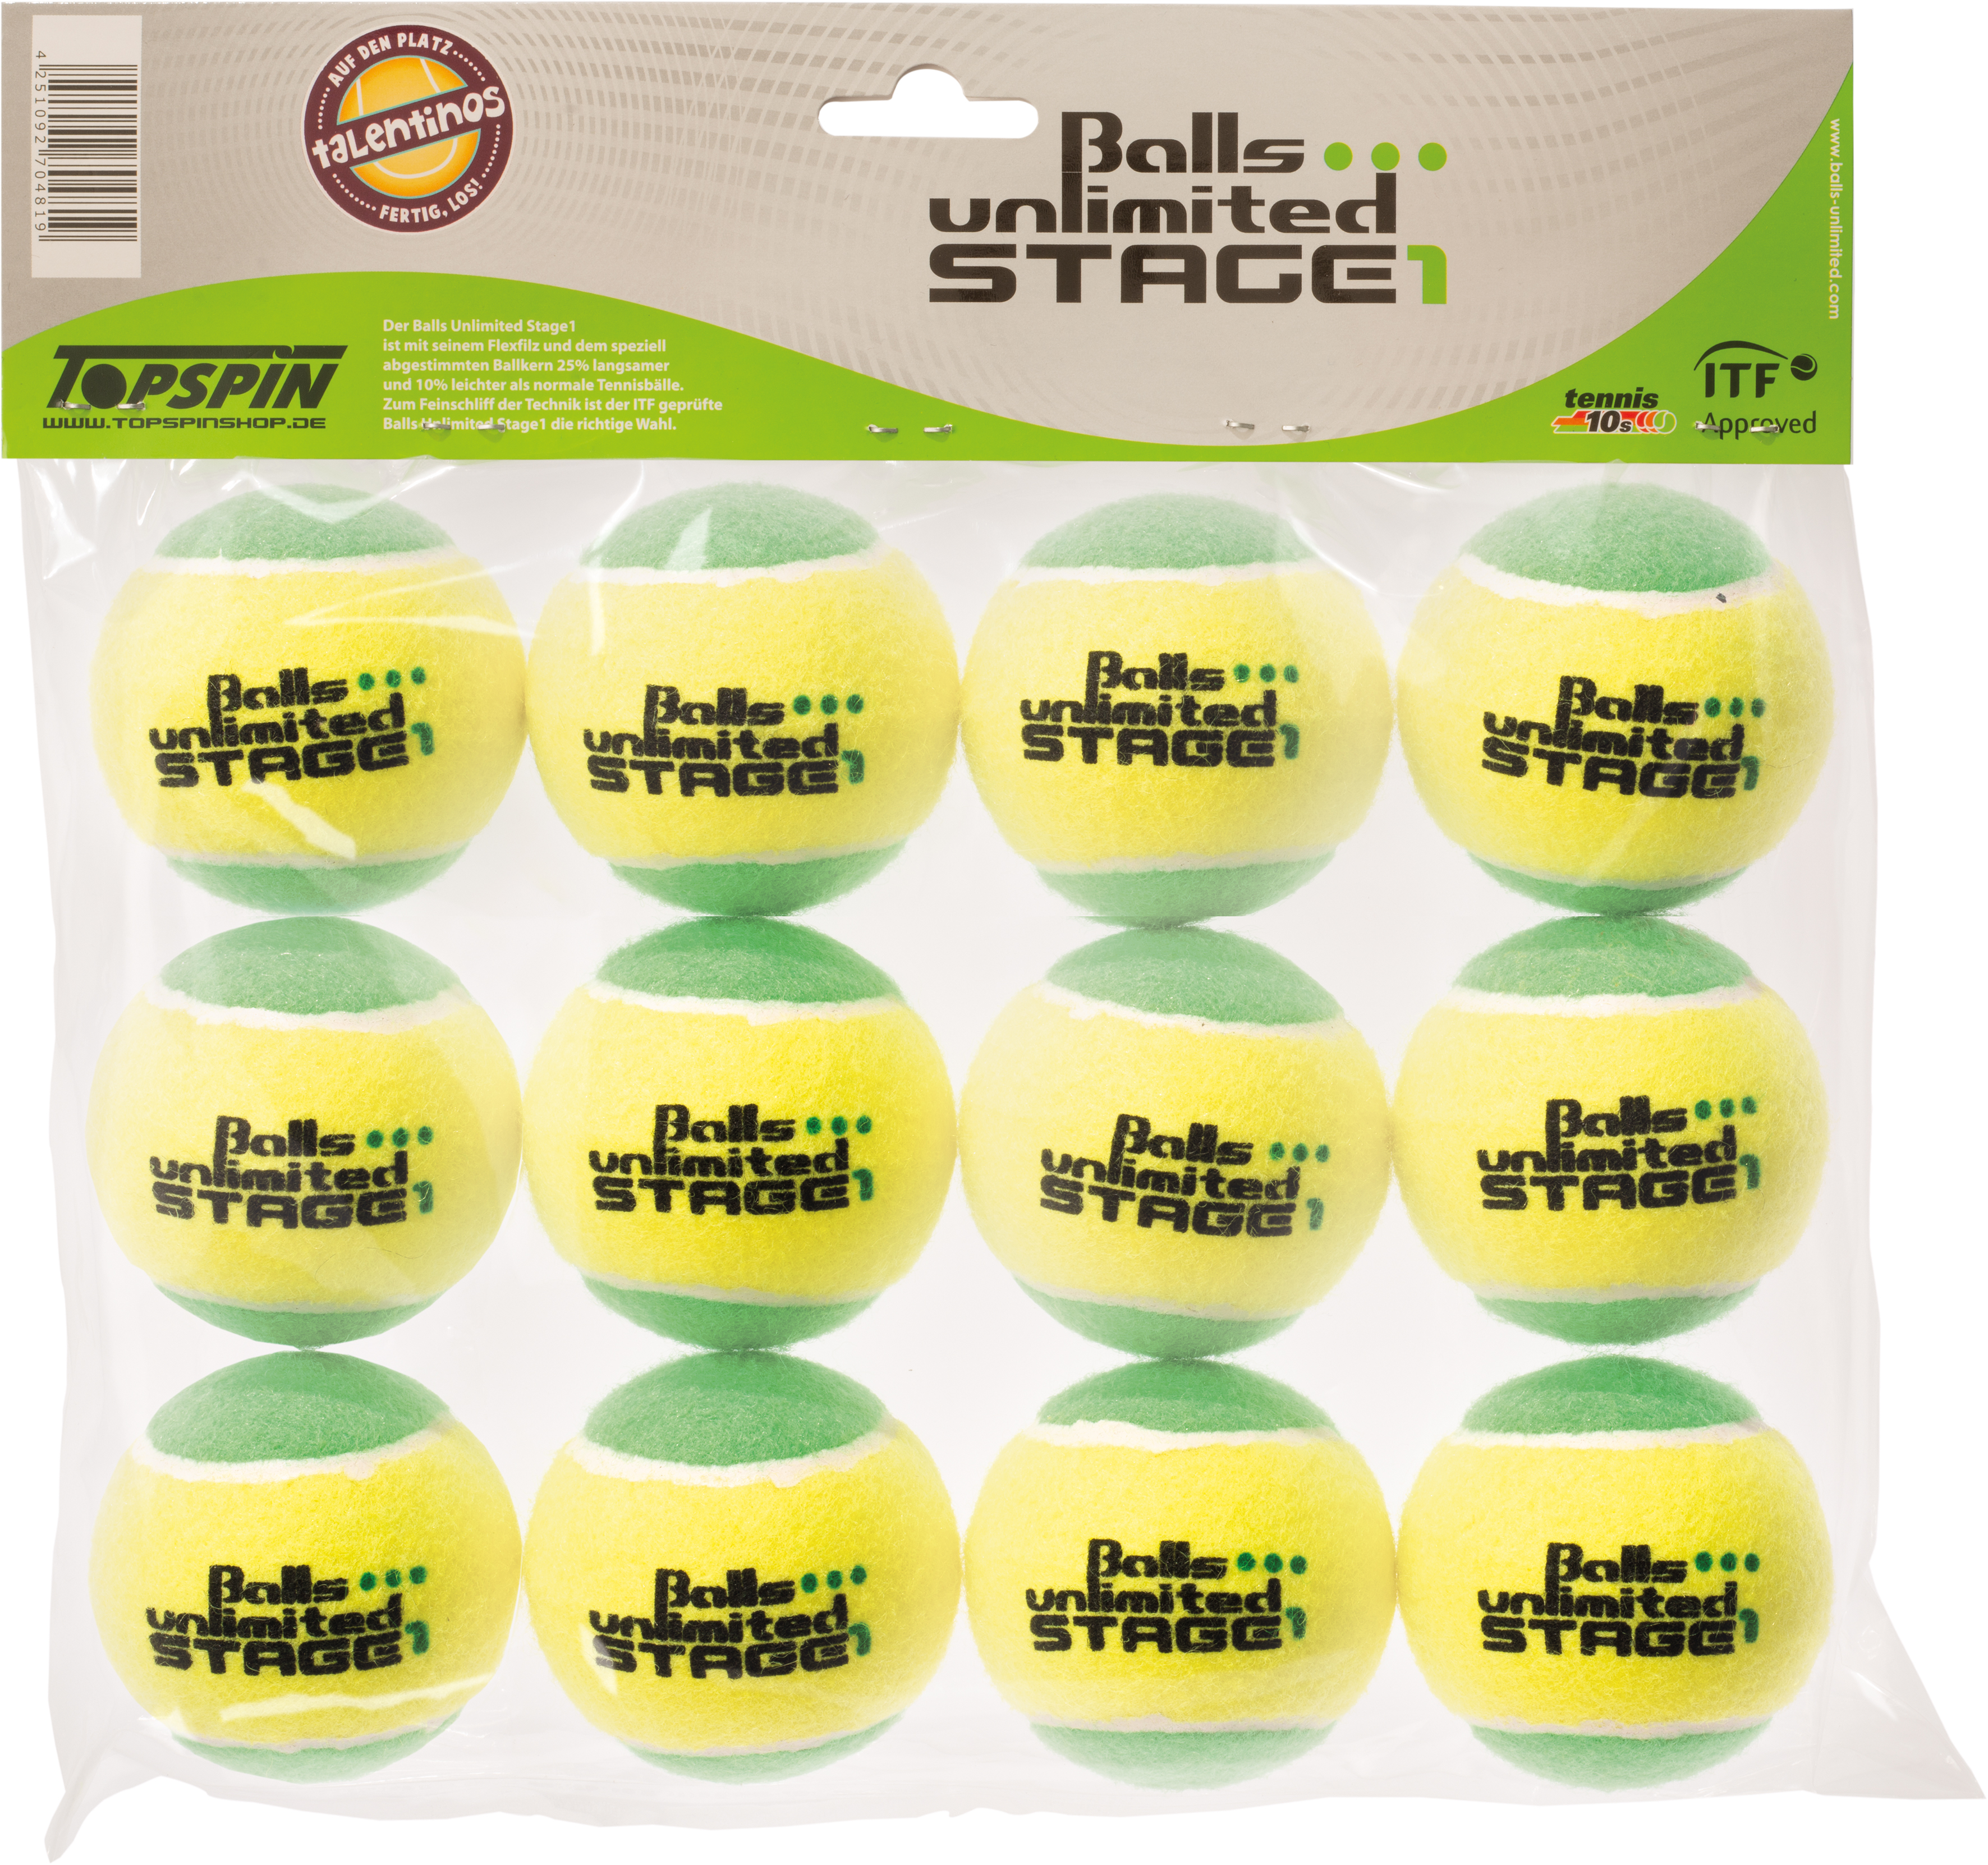 Tennisball Balls unlimited Stage 1